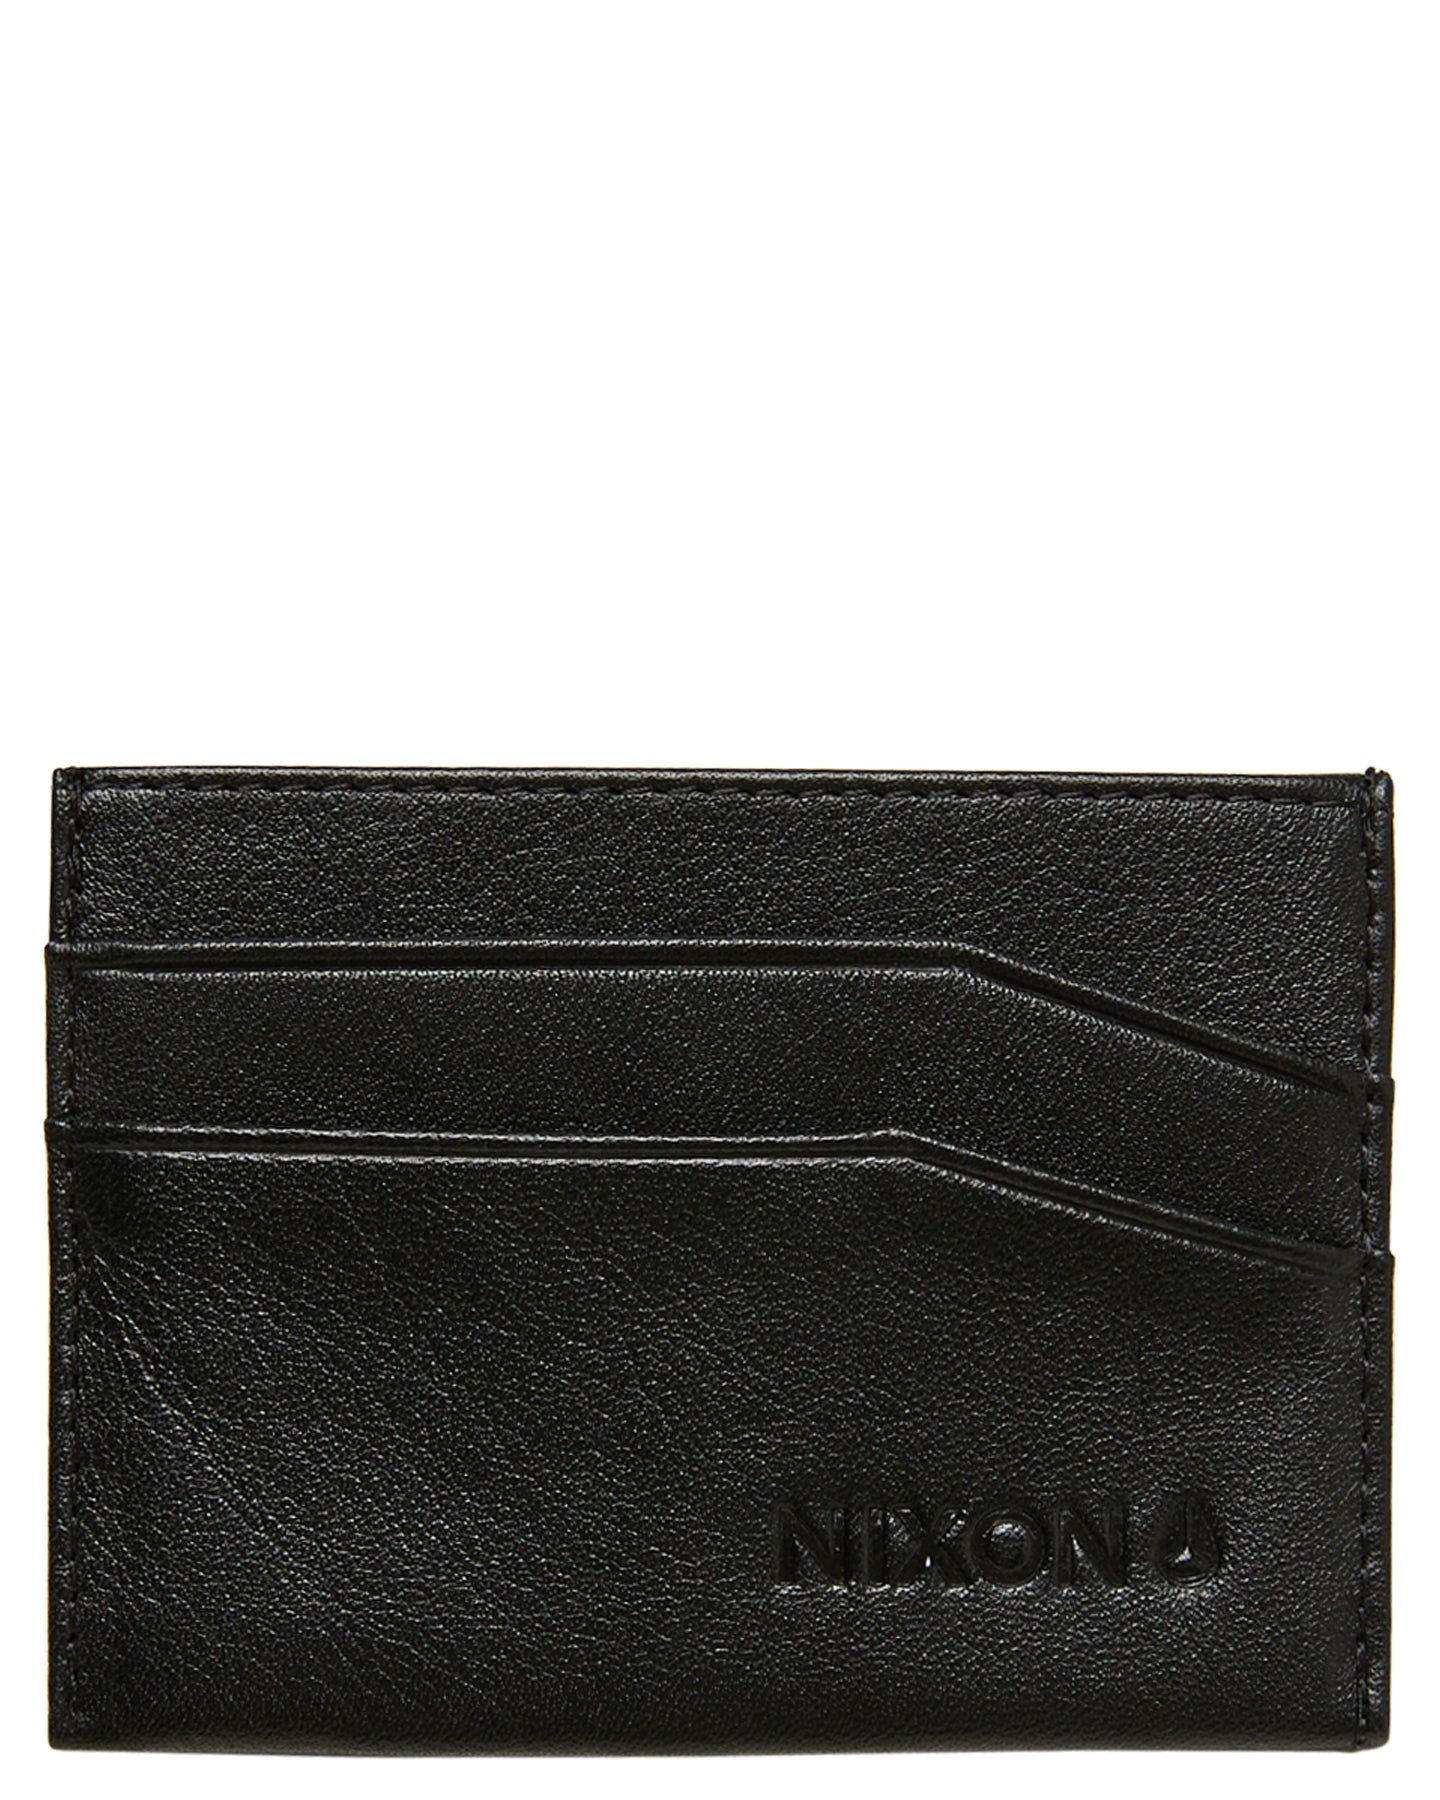 NIXON FLACO LEATHER CARD WALLET - BLACK